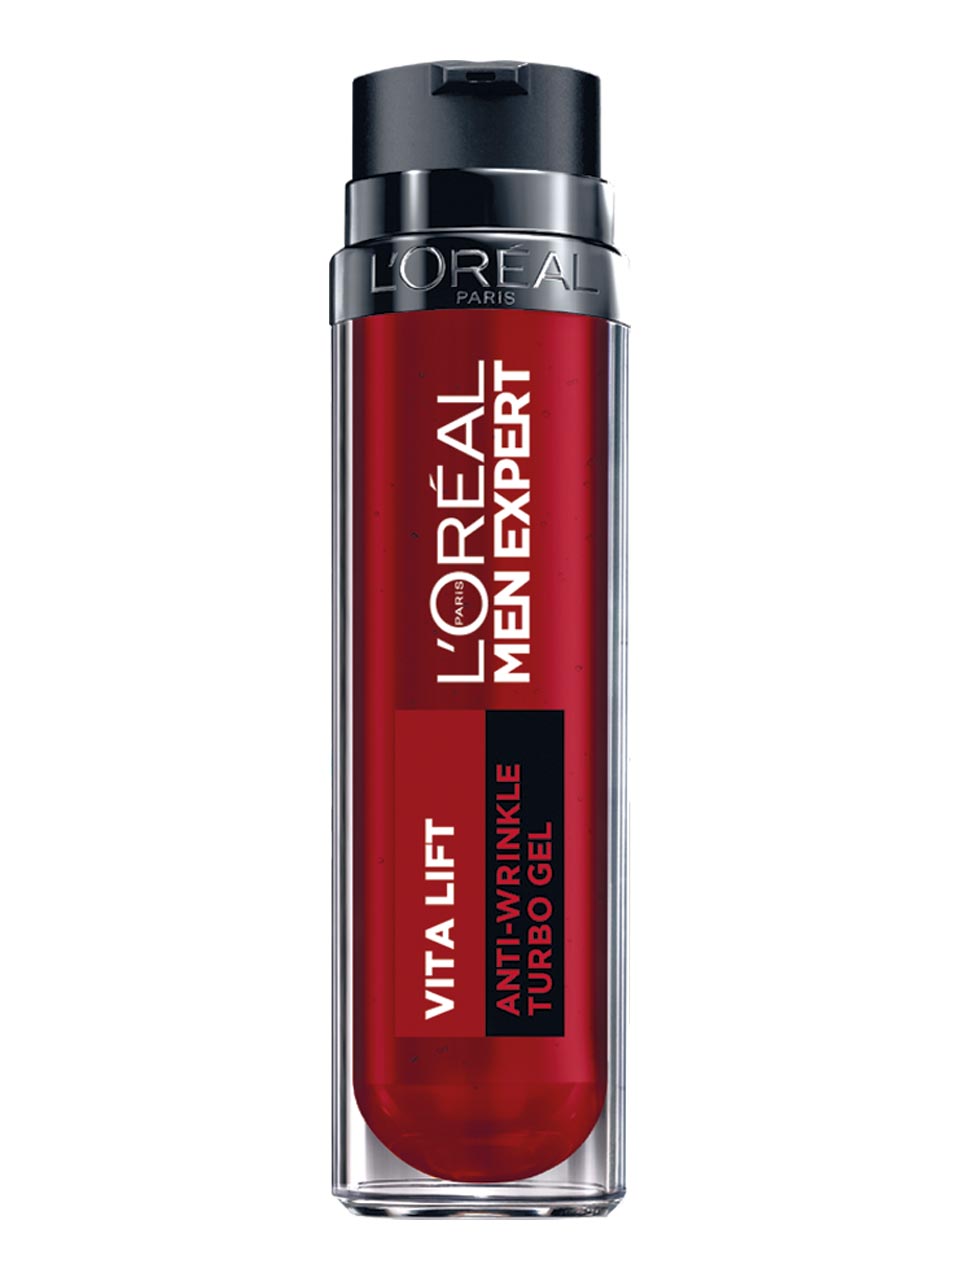 L'Oréal Paris Vitalift Fast Action Anti-Wrinkle Gel Vinoforce 50 ml null - onesize - 1